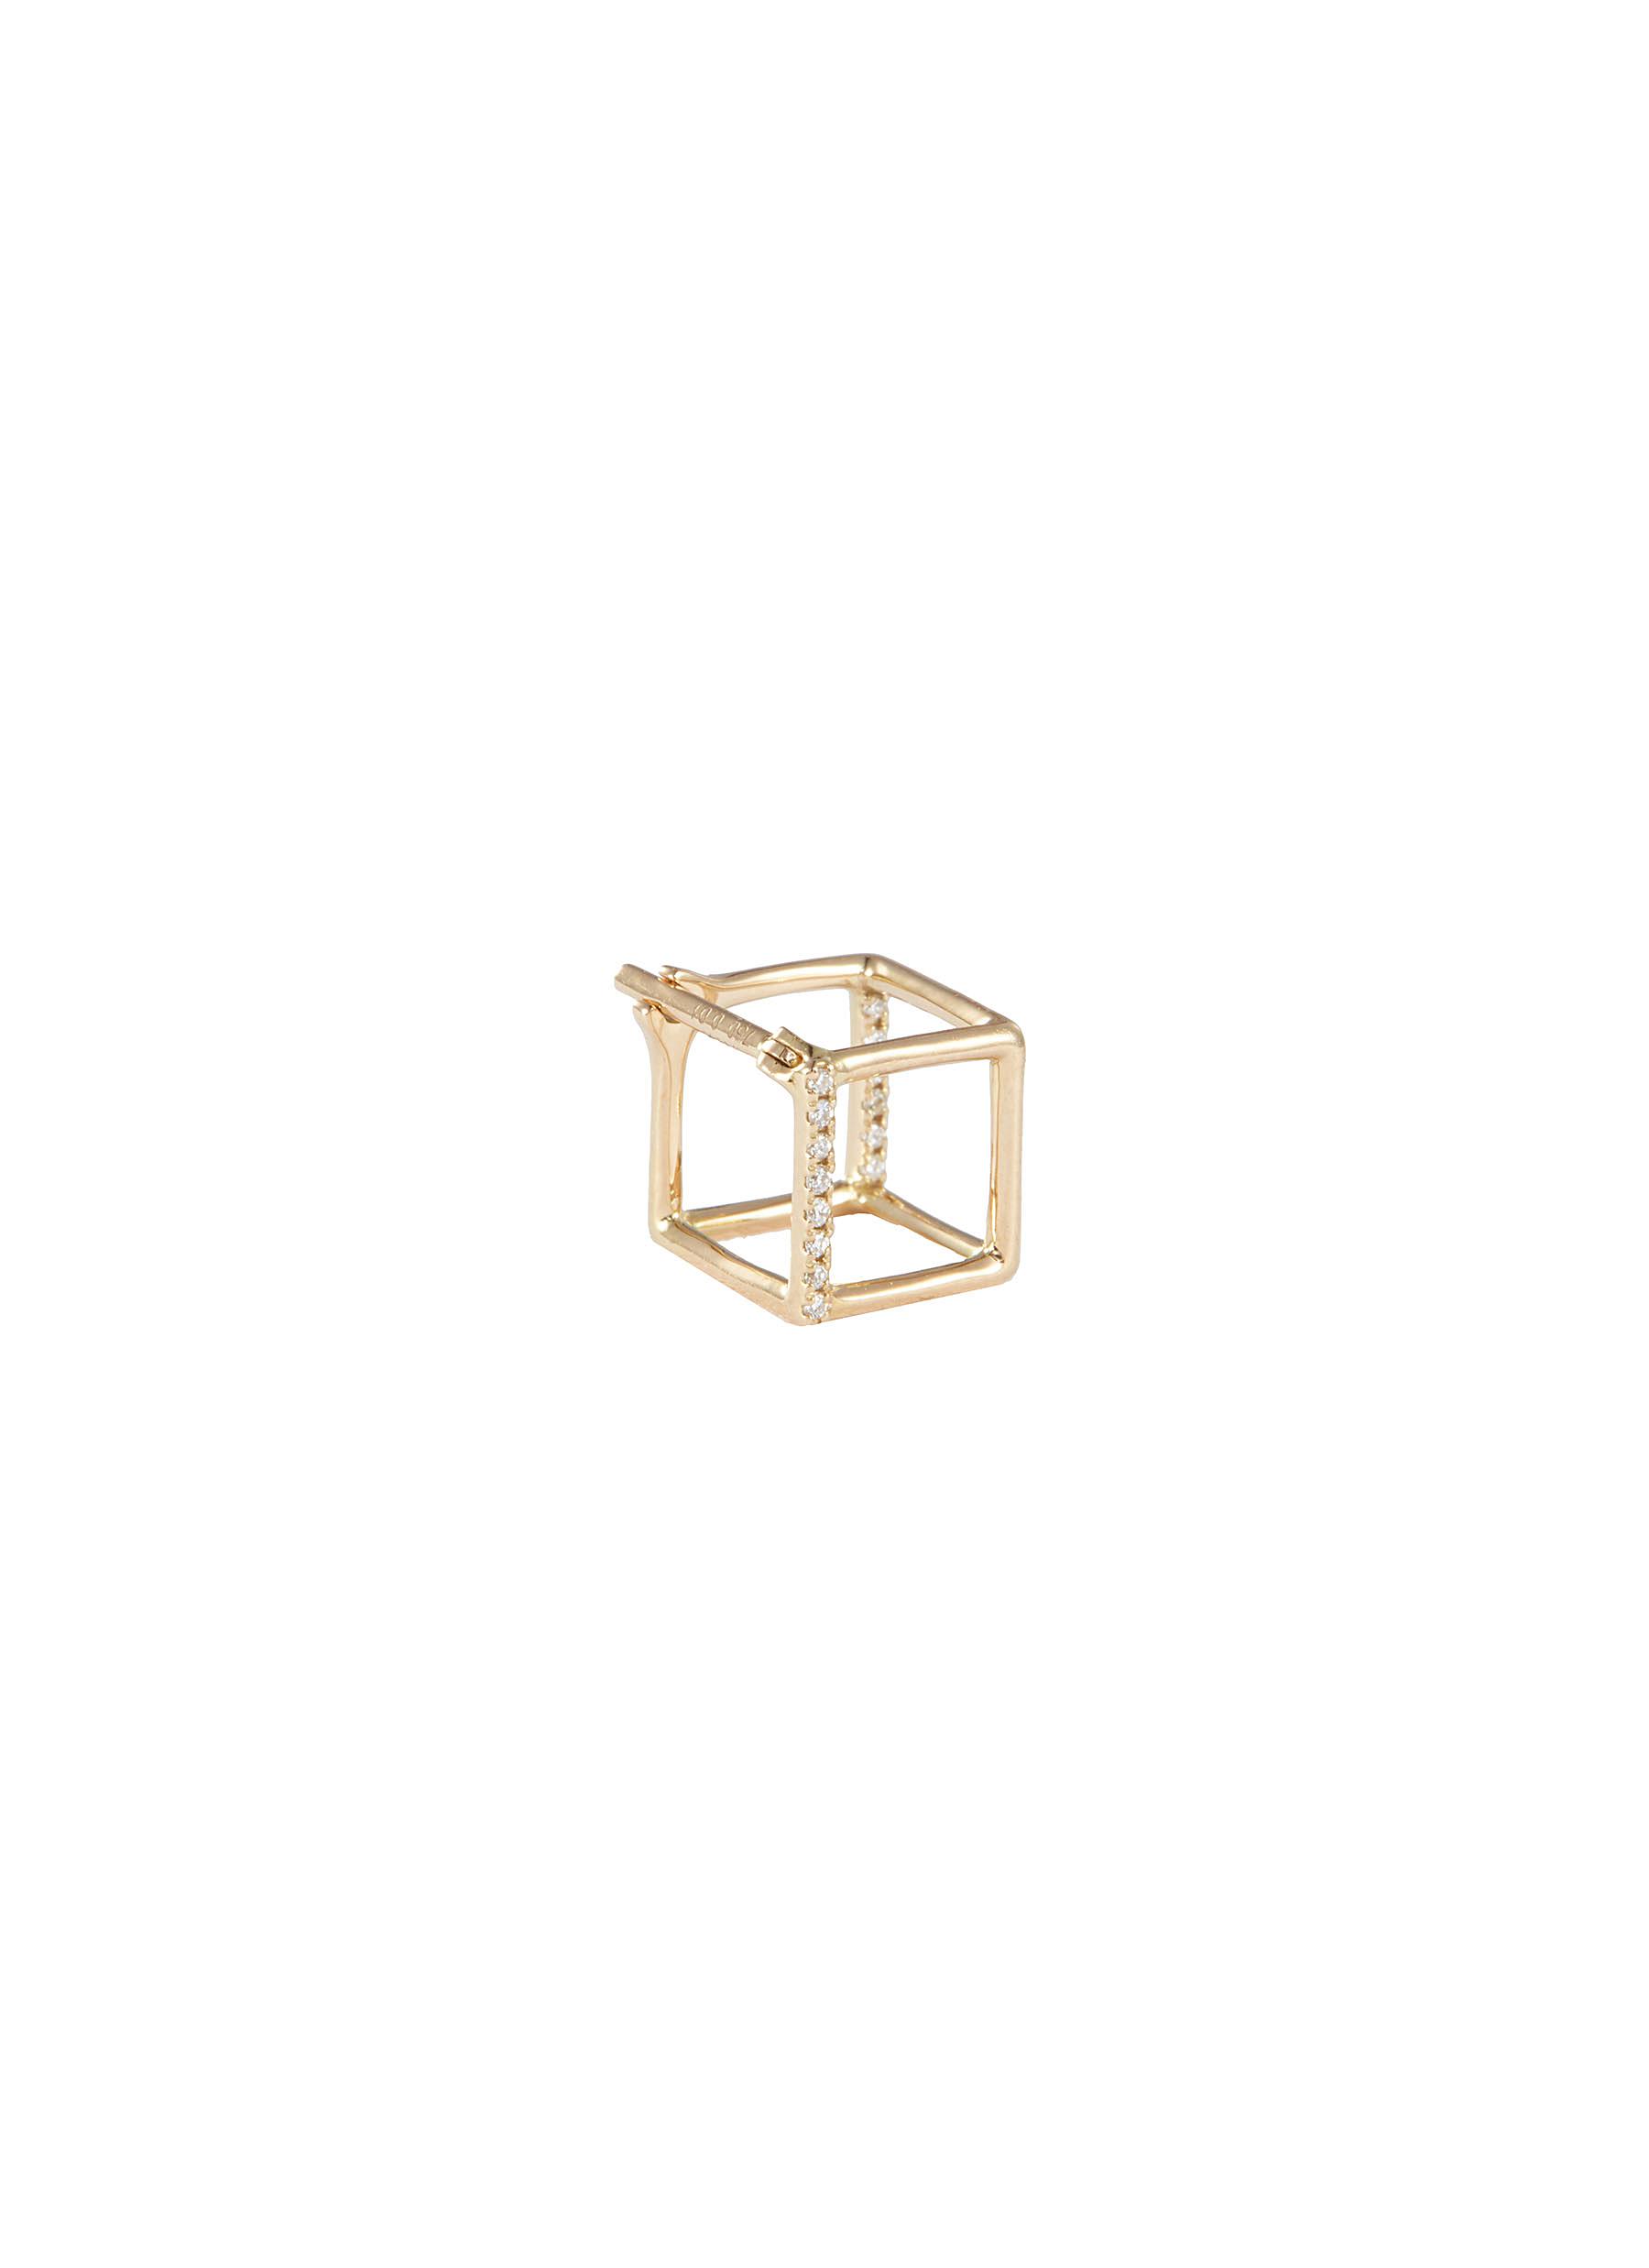 ’Square’ diamond 18k yellow gold cube single earring - 7mm